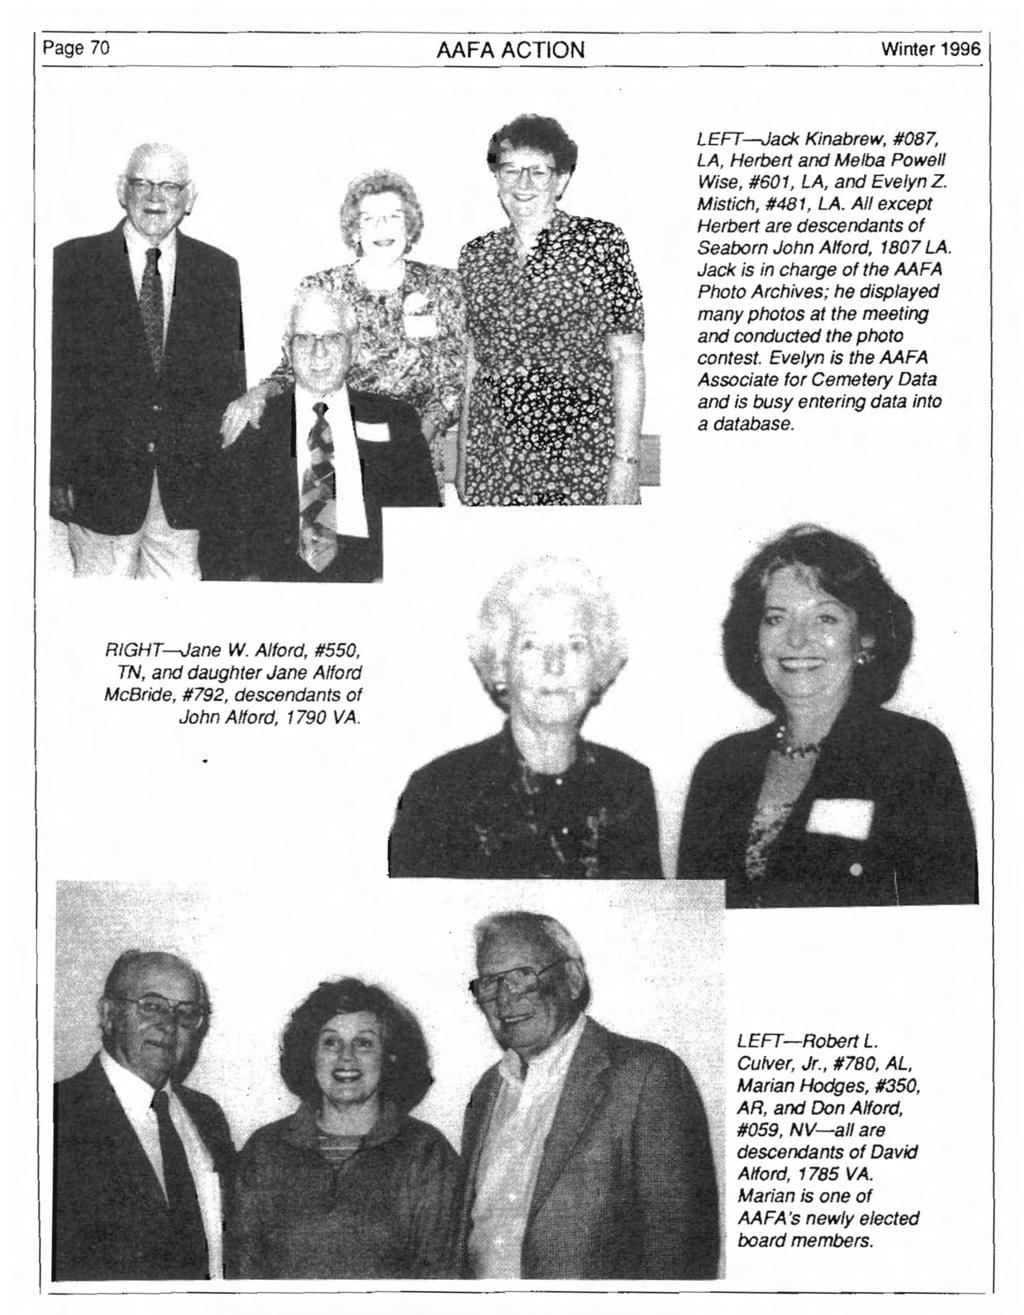 Page 70 AAFAACTION Winter 1996 LEFT---.Jack Kinabrew, #087, LA, Herbert and Melba Powell Wise, #601, LA, and Evelyn Z. Mistich, #481, LA.